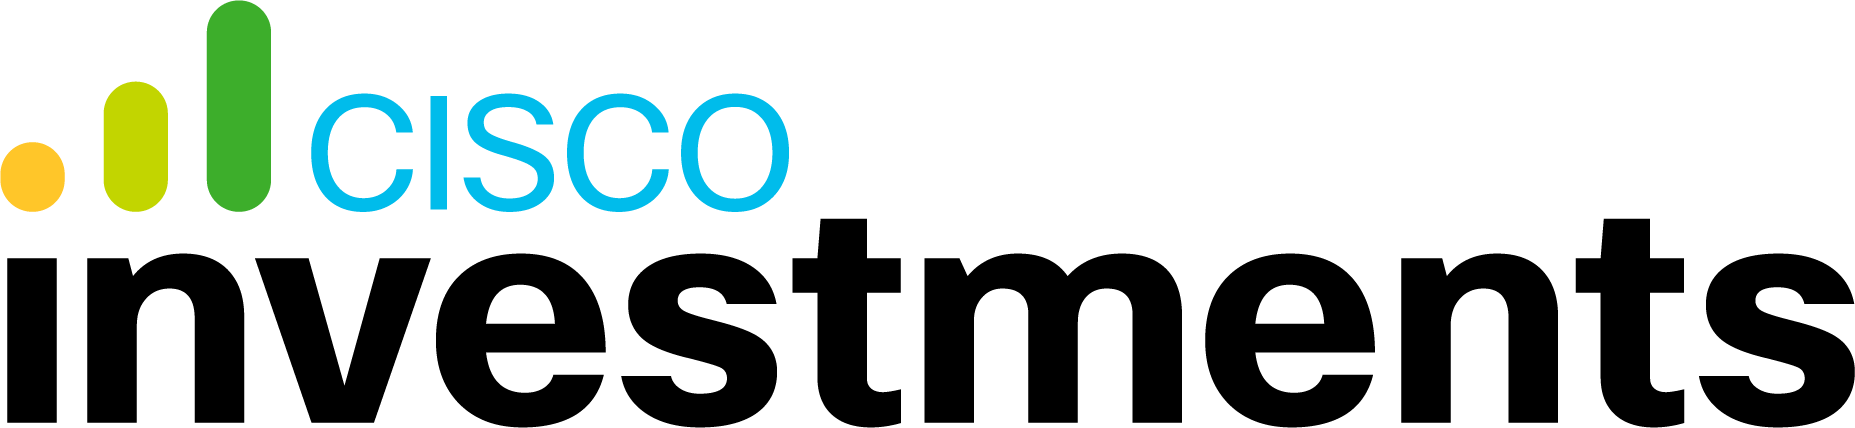 Cisco logo imagen PNG